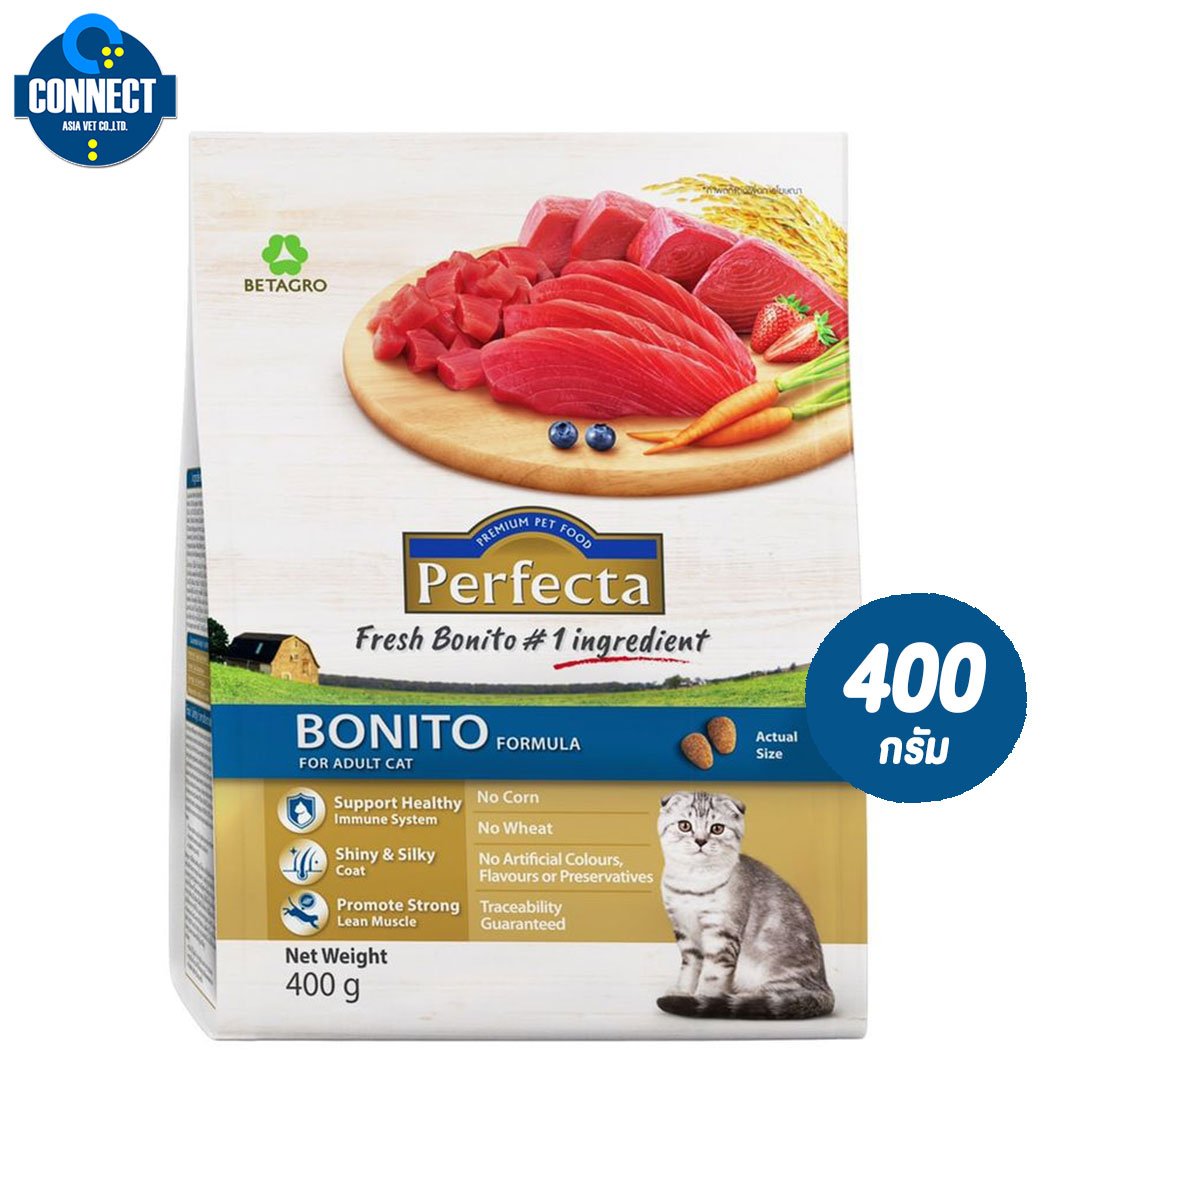 Perfecta Cat Food Adult Bonito (400 g) เพอร์เฟคต้า อาหารแมวโต สูตรเนื้อปลาโบนิโต (400 ก.)